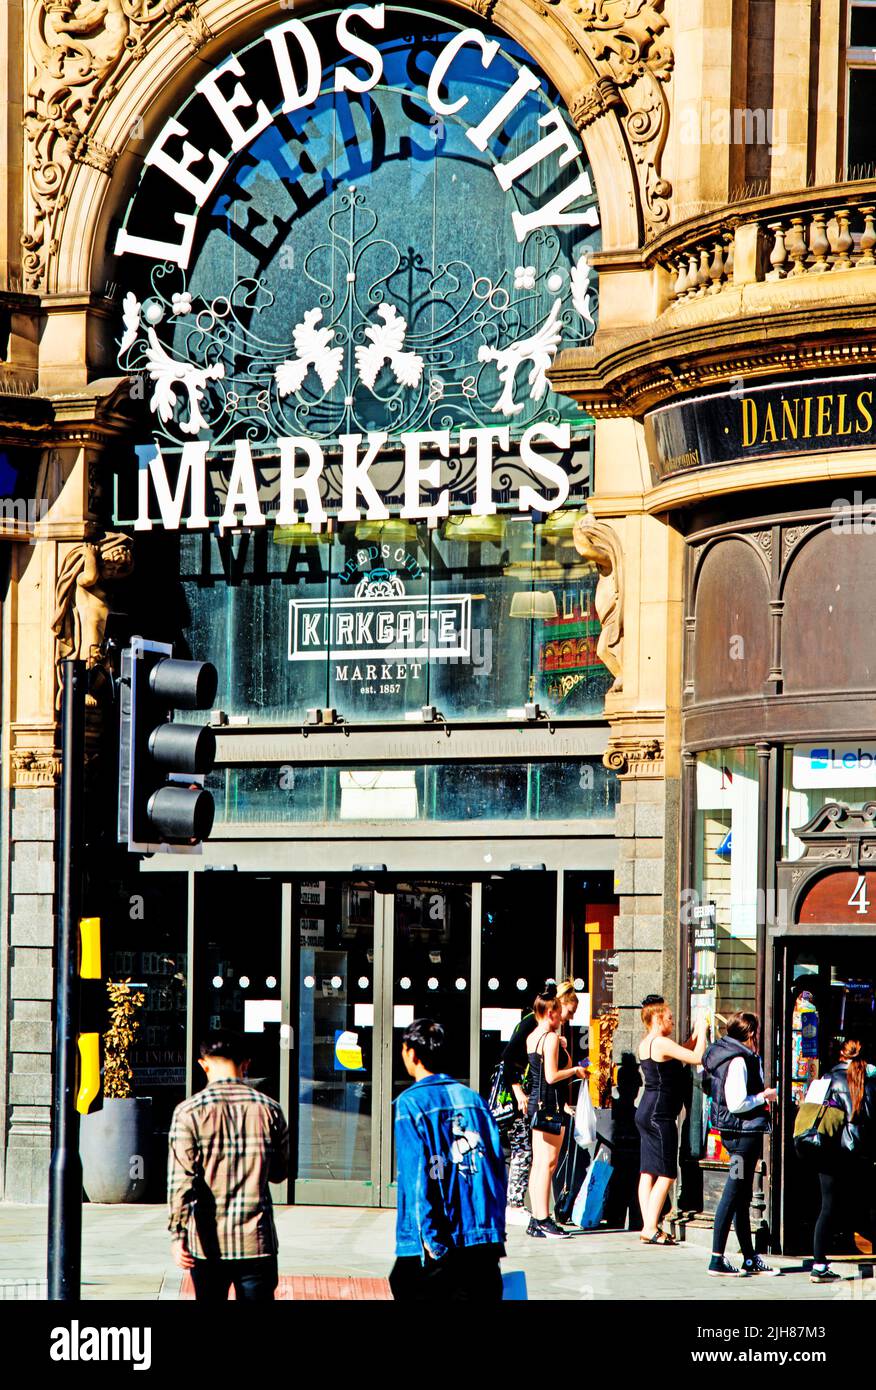 Mercados de la ciudad de Leeds, Kirkgate, Leeds, Inglaterra Foto de stock